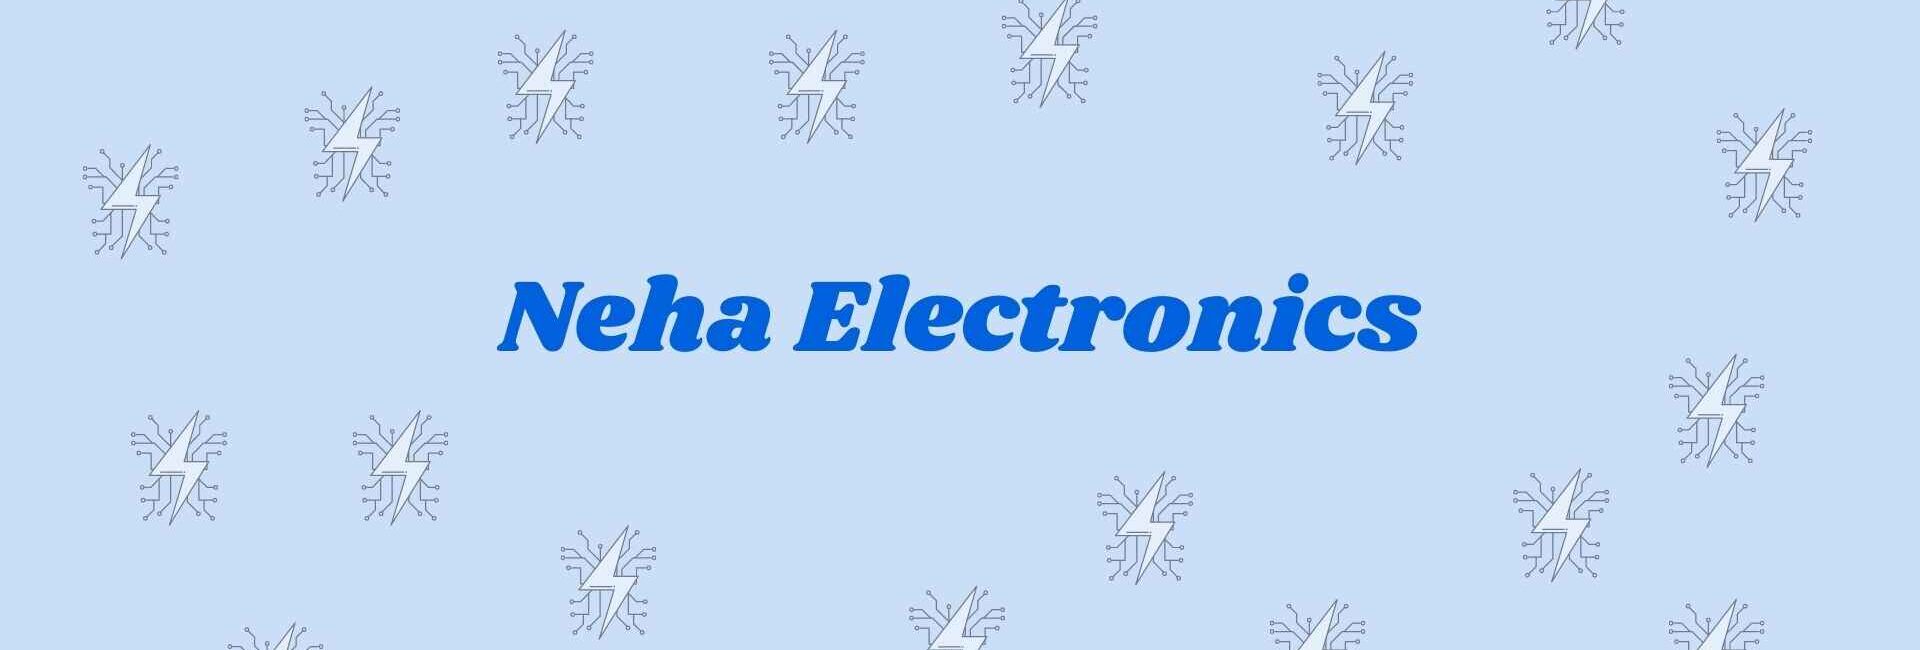 Neha Electronics - Electronics Goods Dealer in Noida